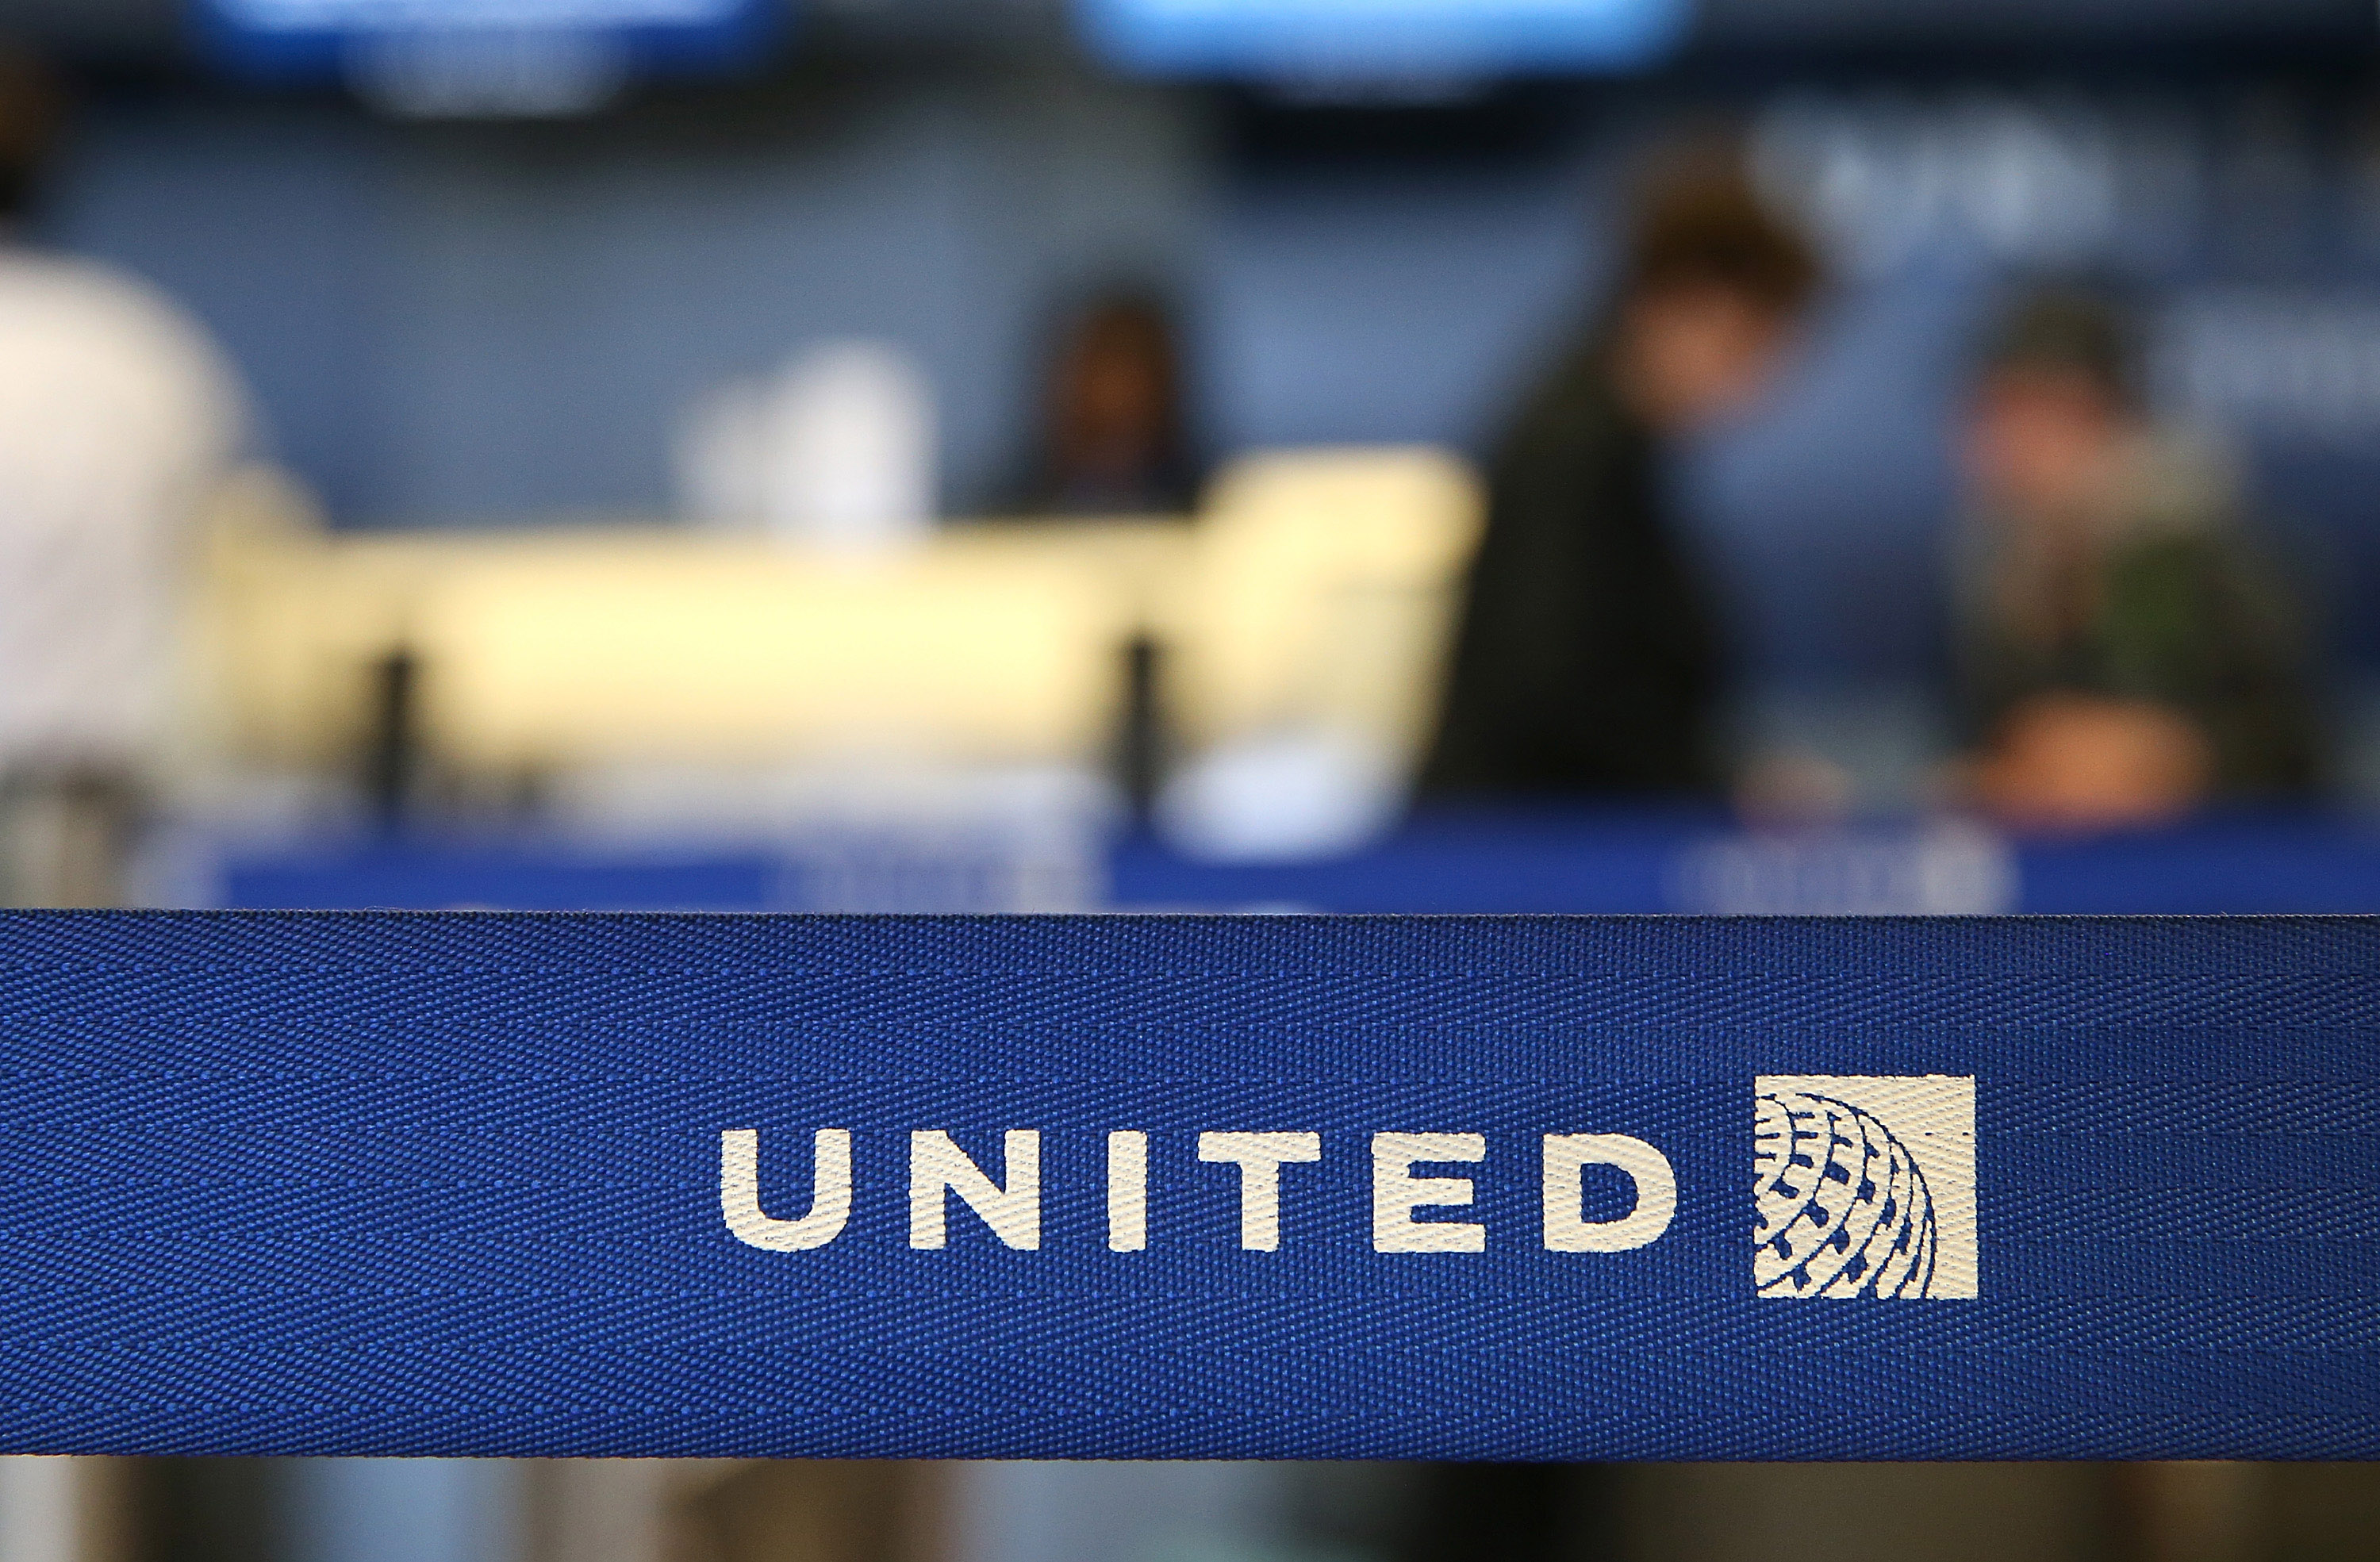 united boarding pass